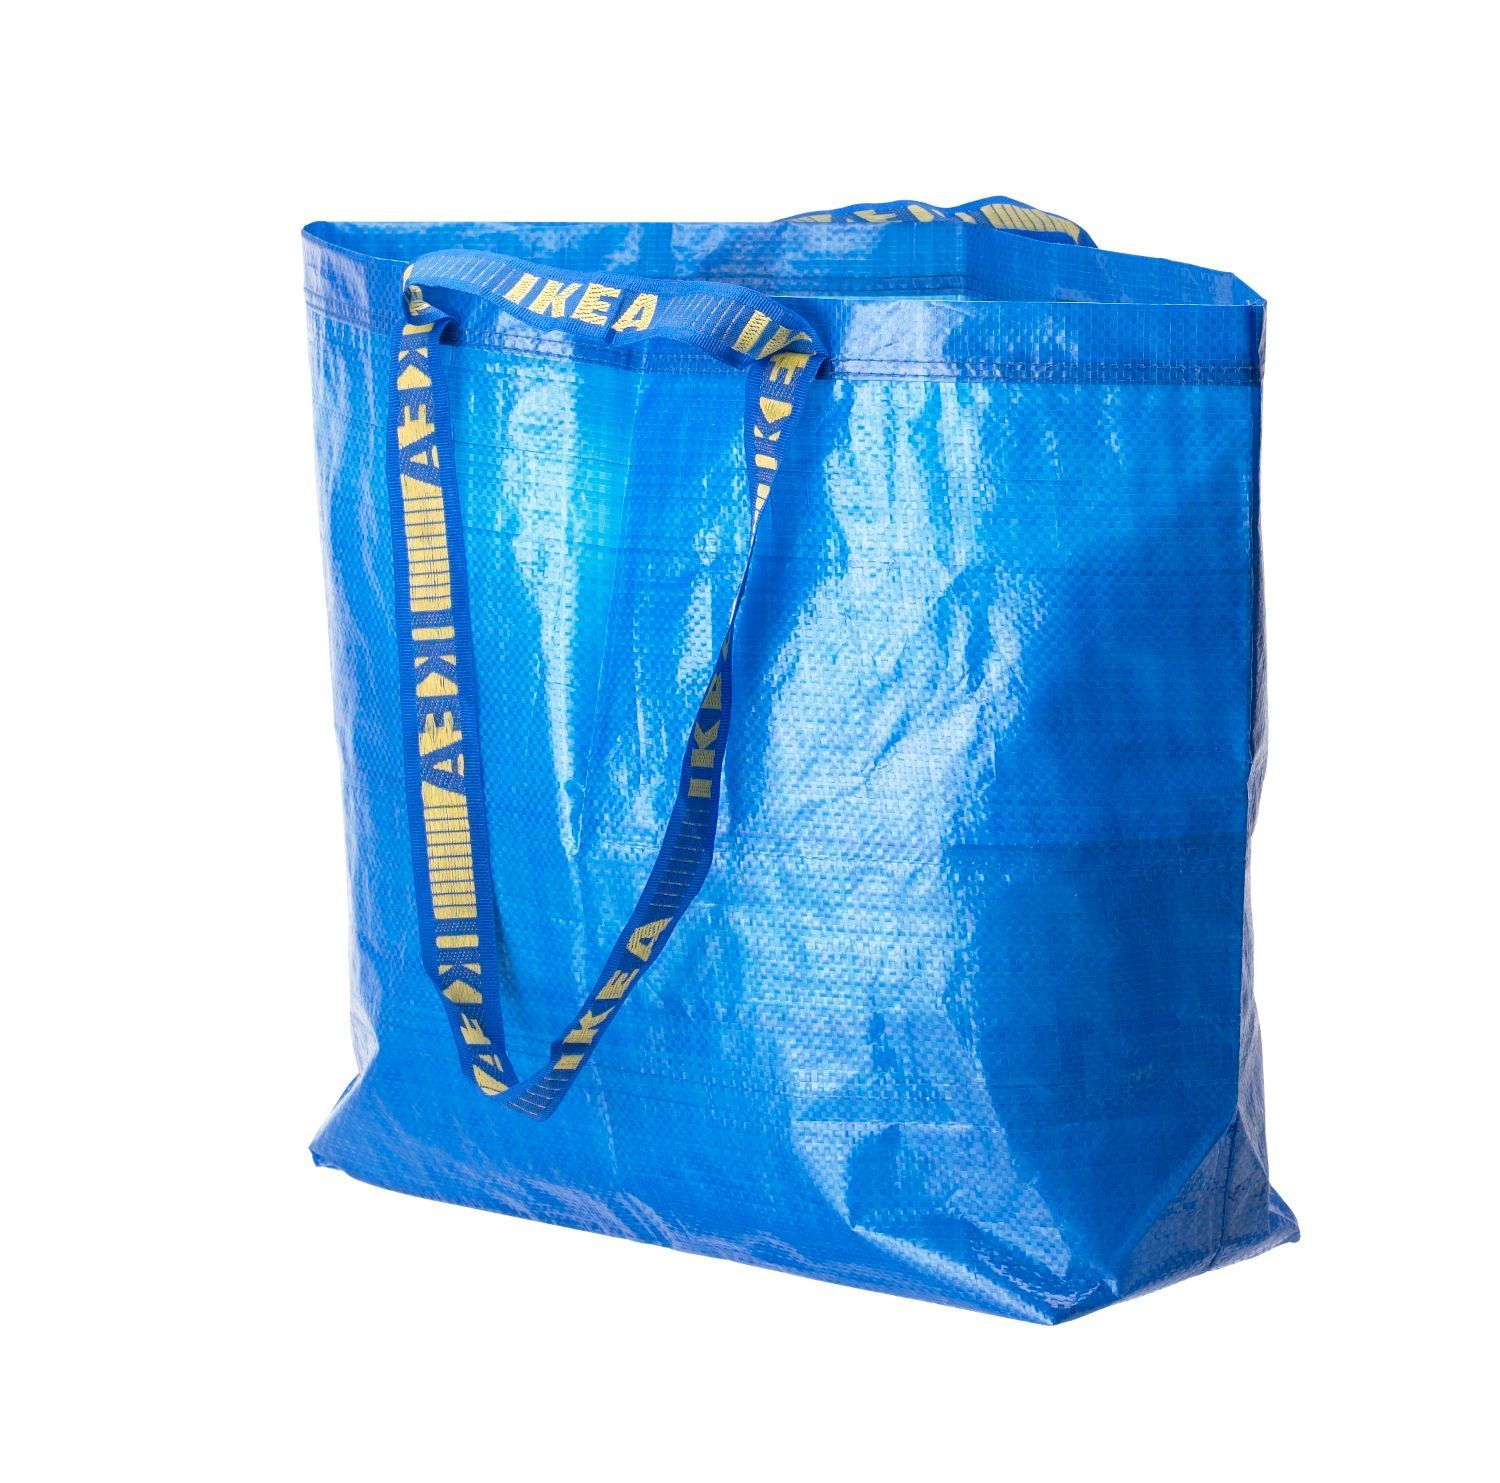 Modrá taška FRAKTA (36l) Ikea výrobky 2003/2004 2016/2017